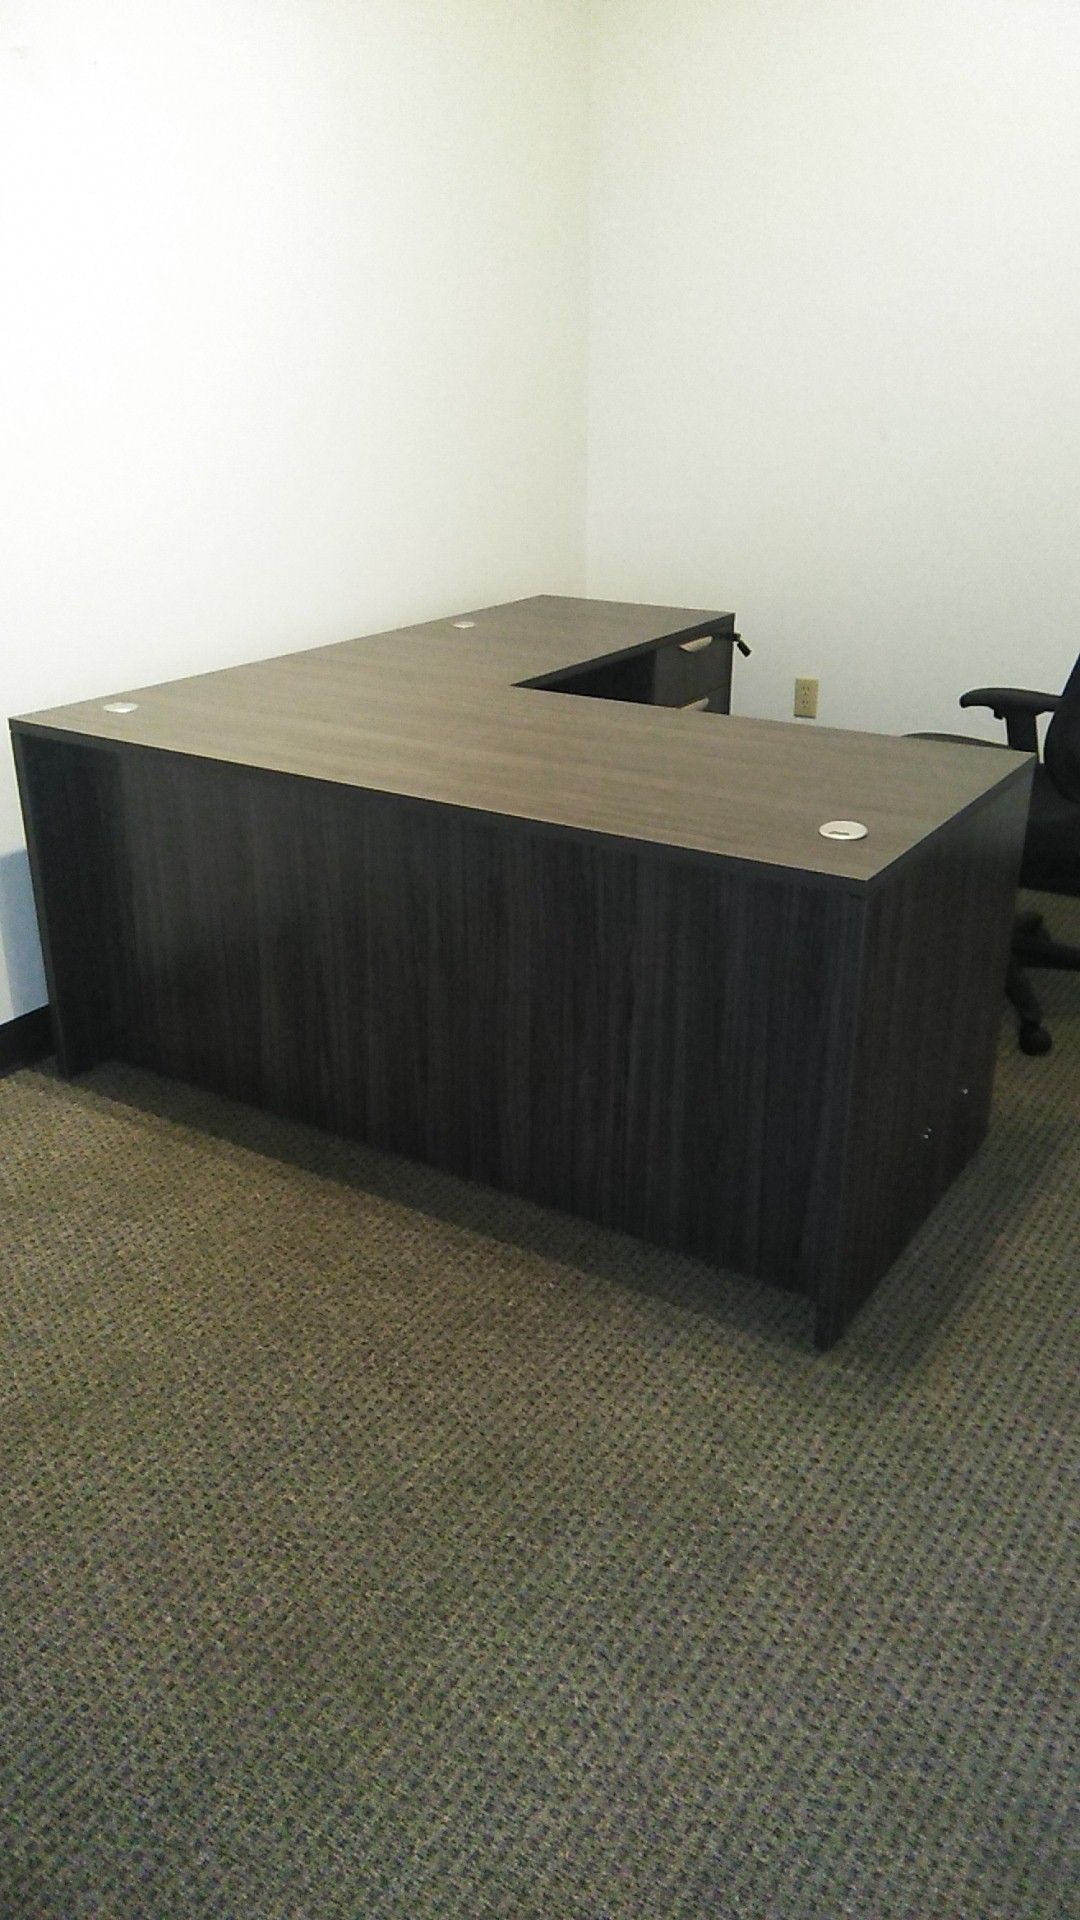 L-shape desk 5.5'x6' gray laminate